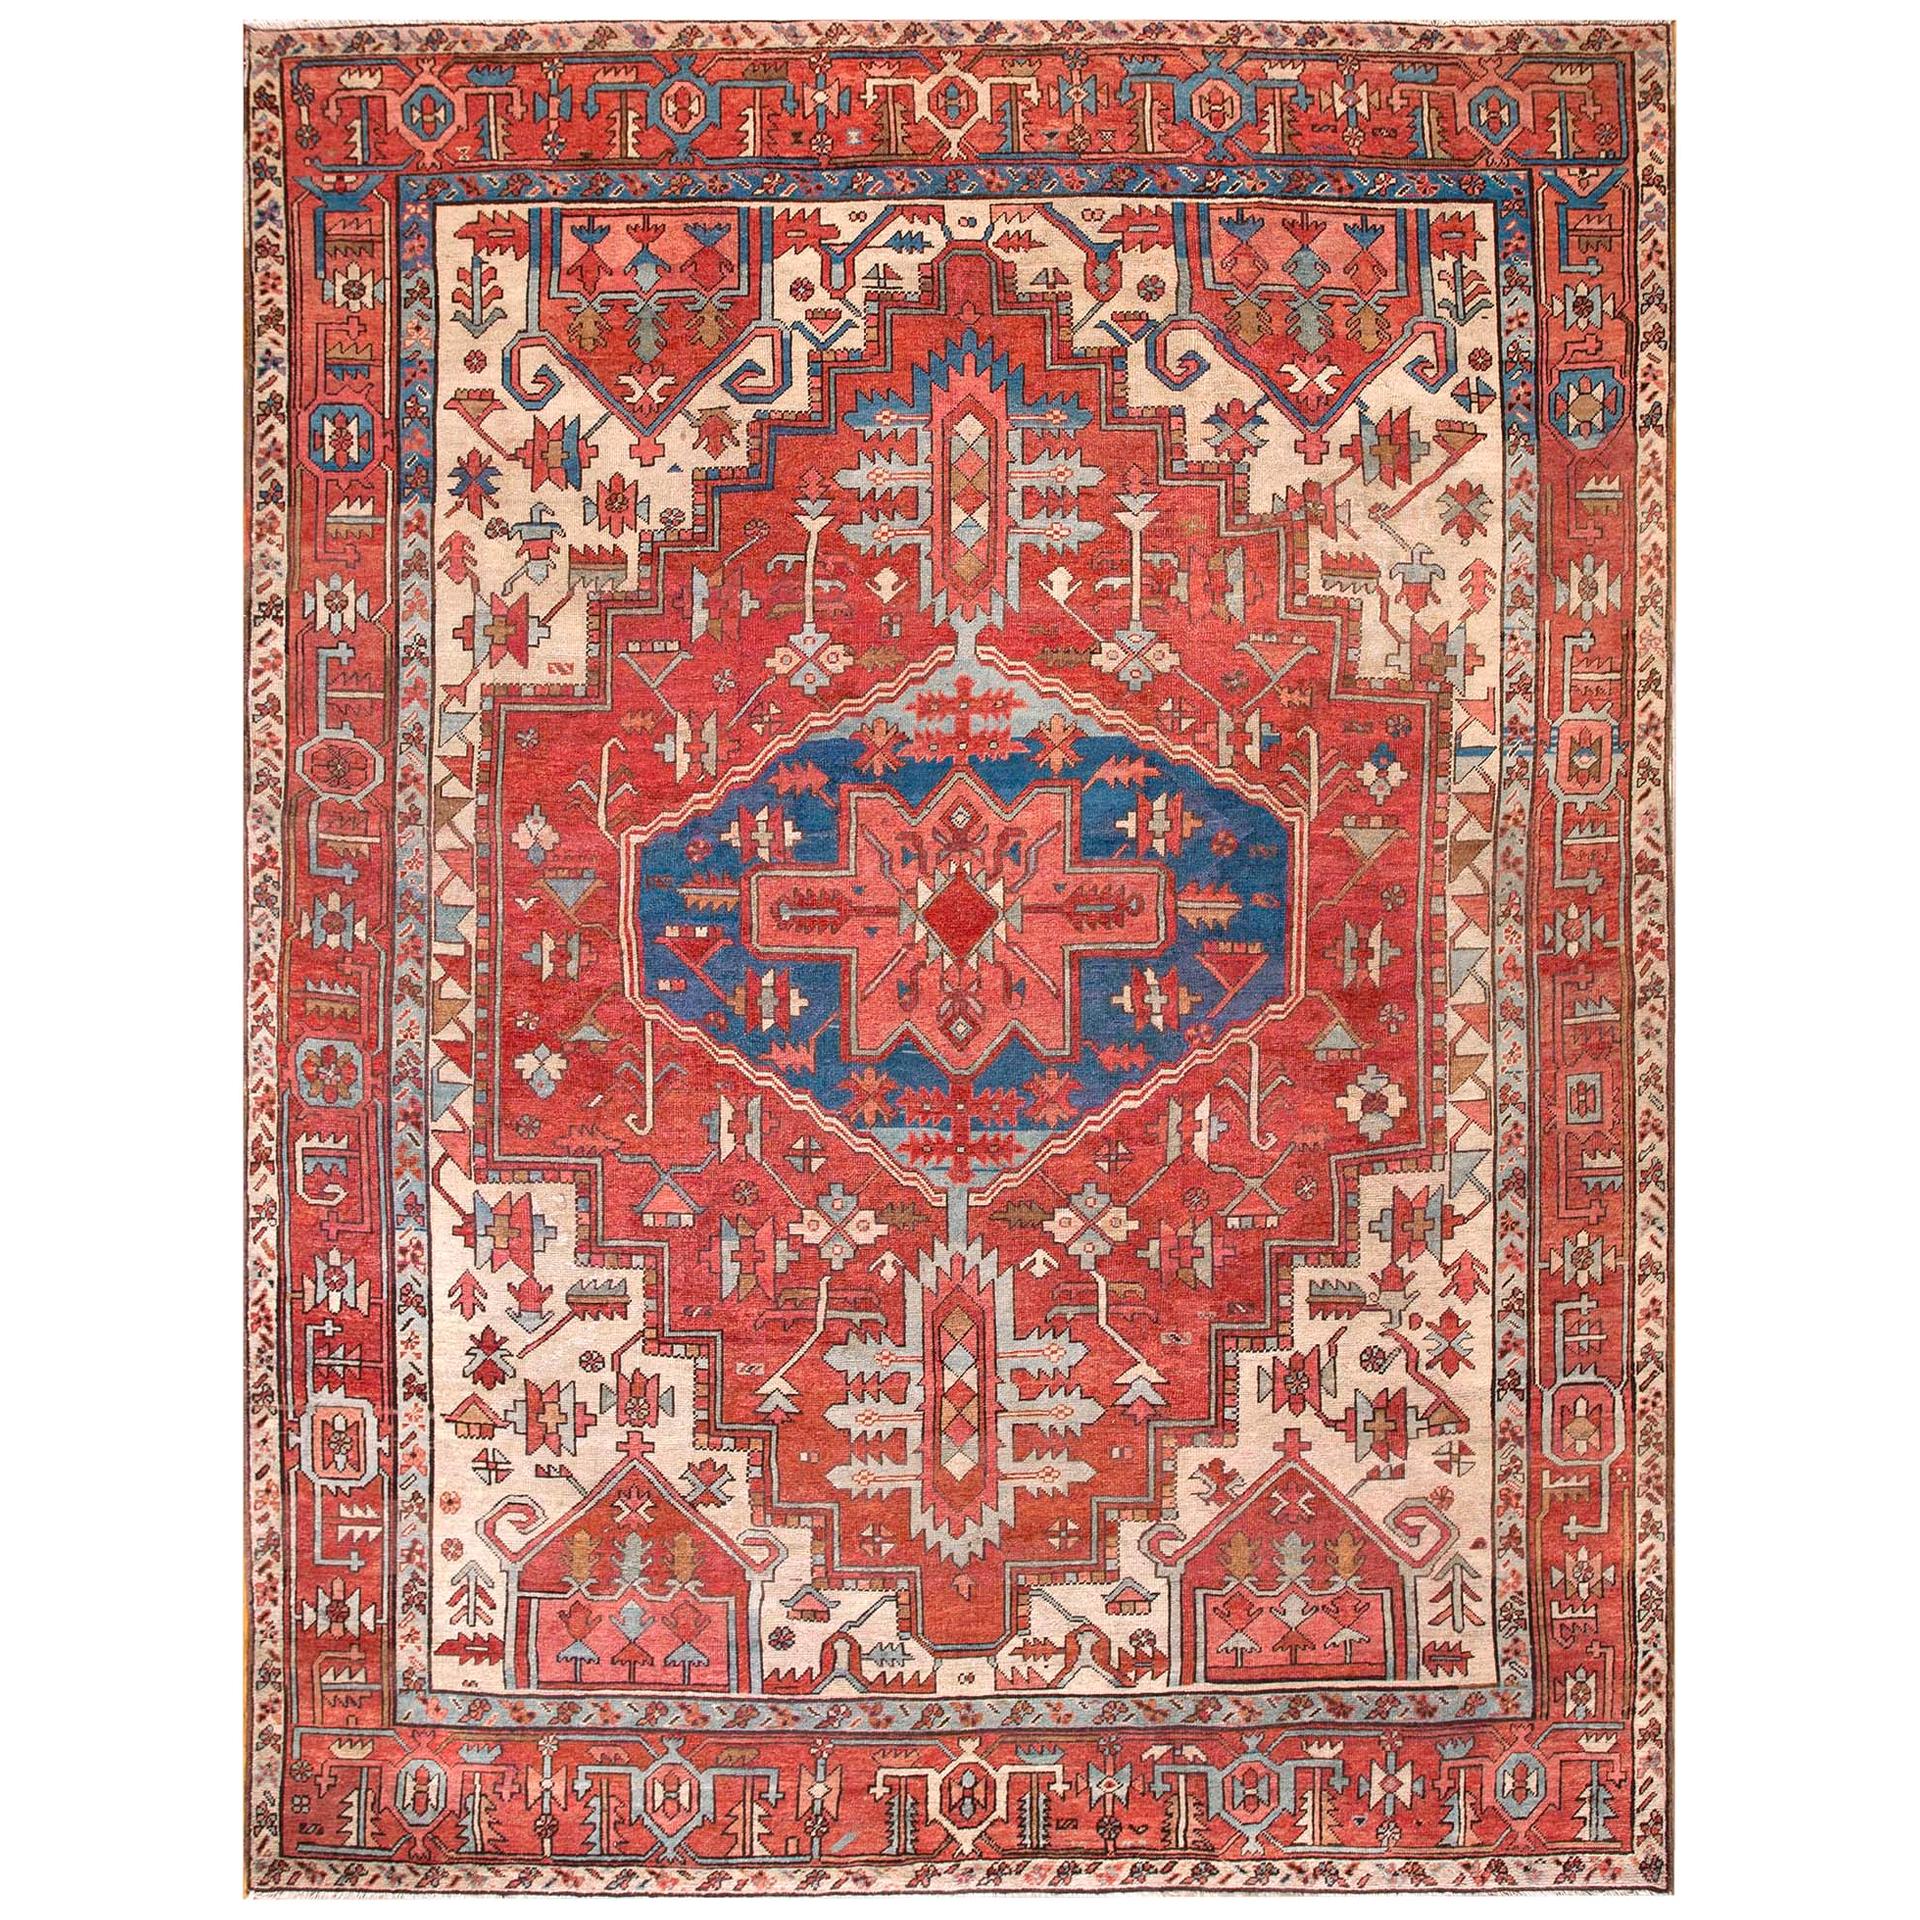 Late 19th Century N.W. Persian Serapi Carpet ( 9'6" x 12'3" - 290 x 373 )